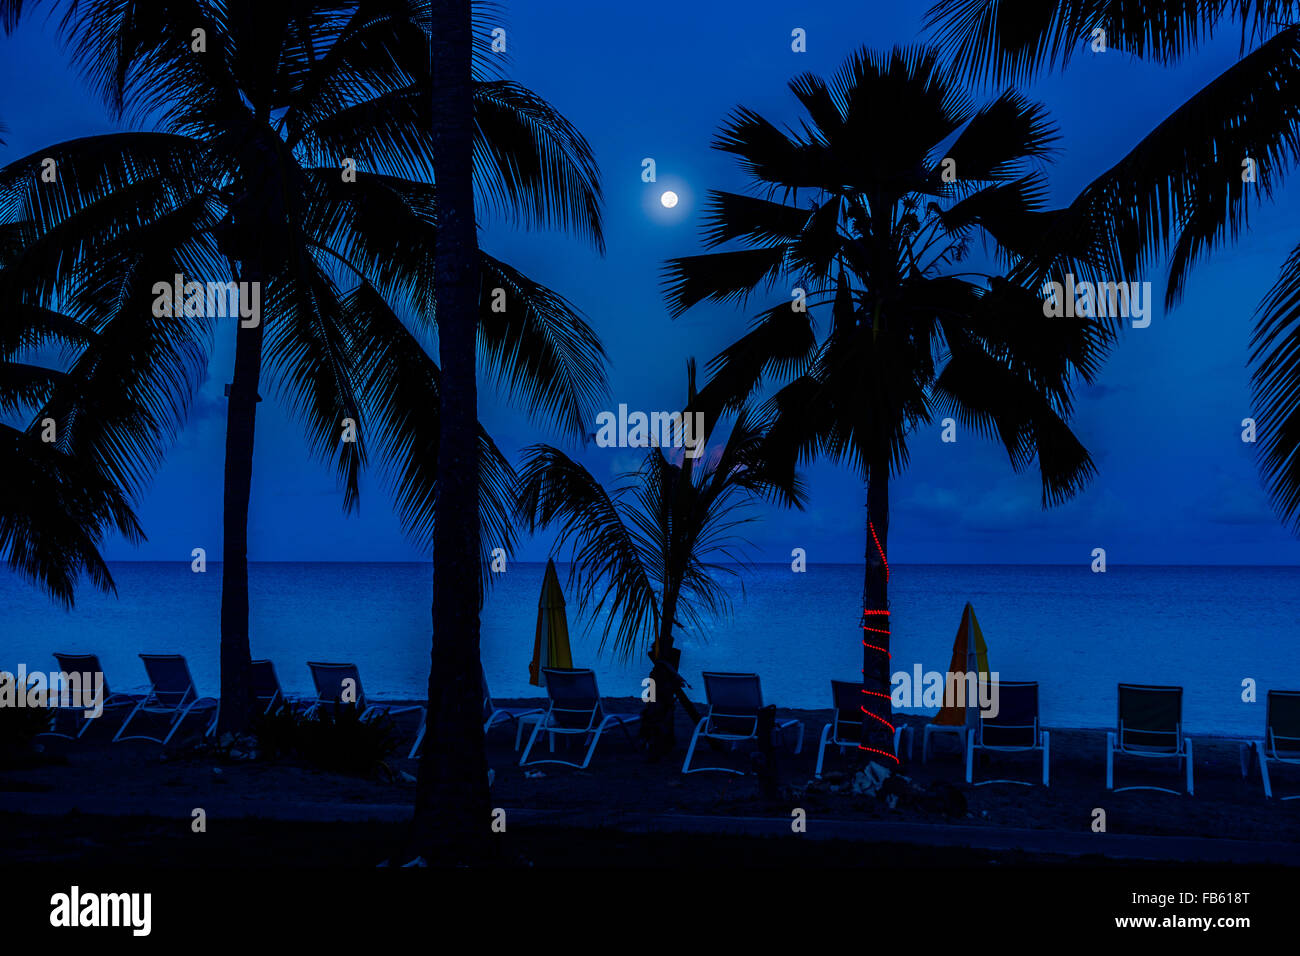 A full moon shines over the Caribbean sea in St. Croix, U.S. Virgin Islands. A palm tree beach scene. Stock Photo